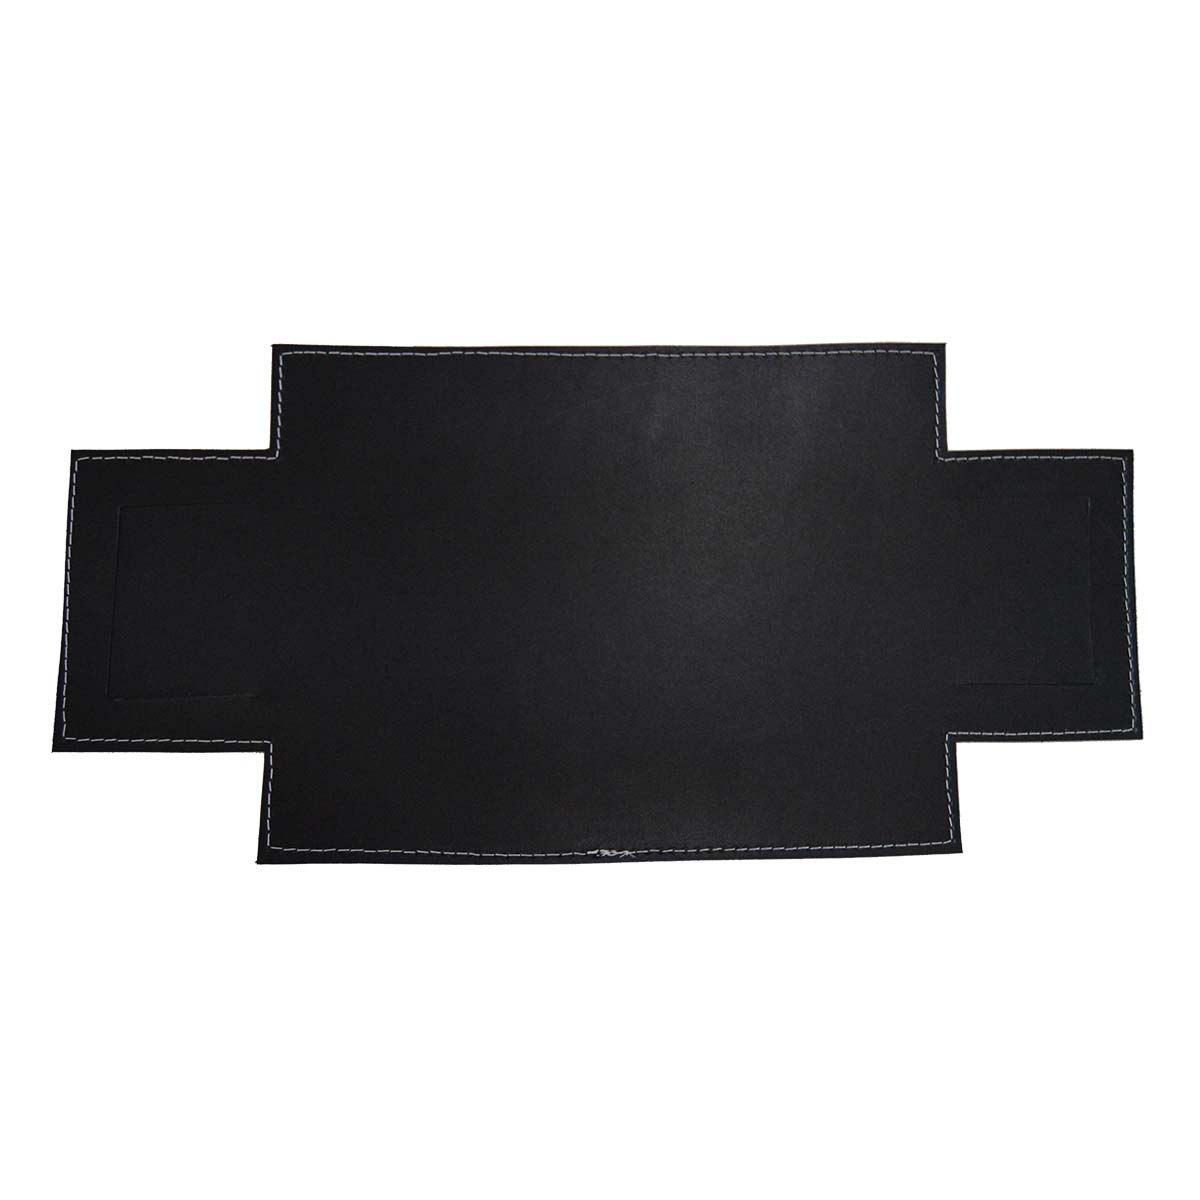 By-Muuh Stort sort læderomslag til fad rektangulært, 33 x 25 cm